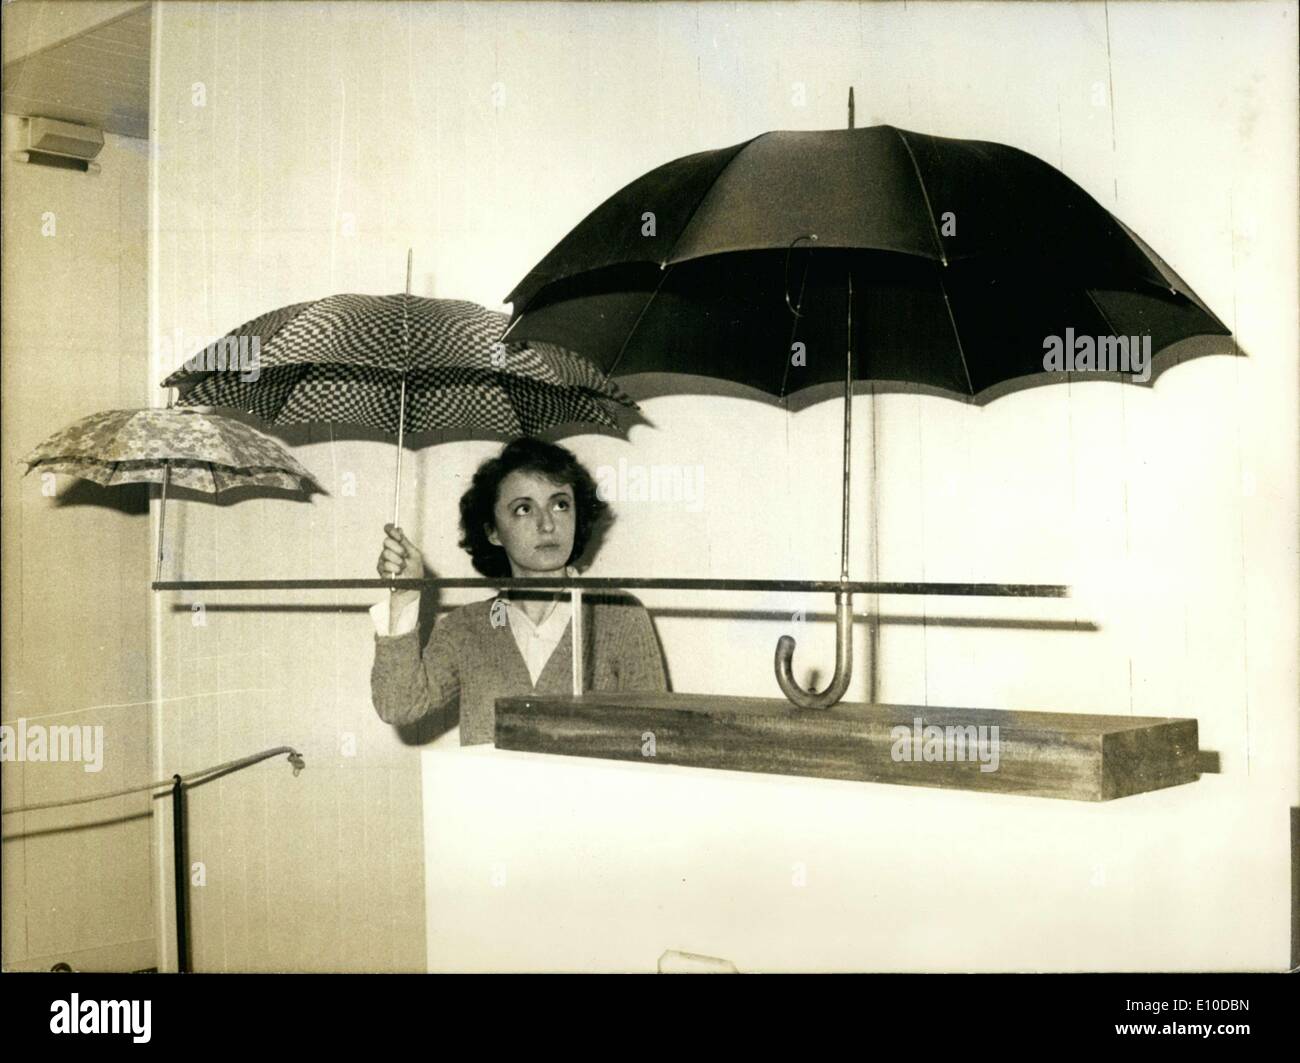 Apr. 28, 1972 - Need a Humorous Family Umbrella Solution? Stock Photo